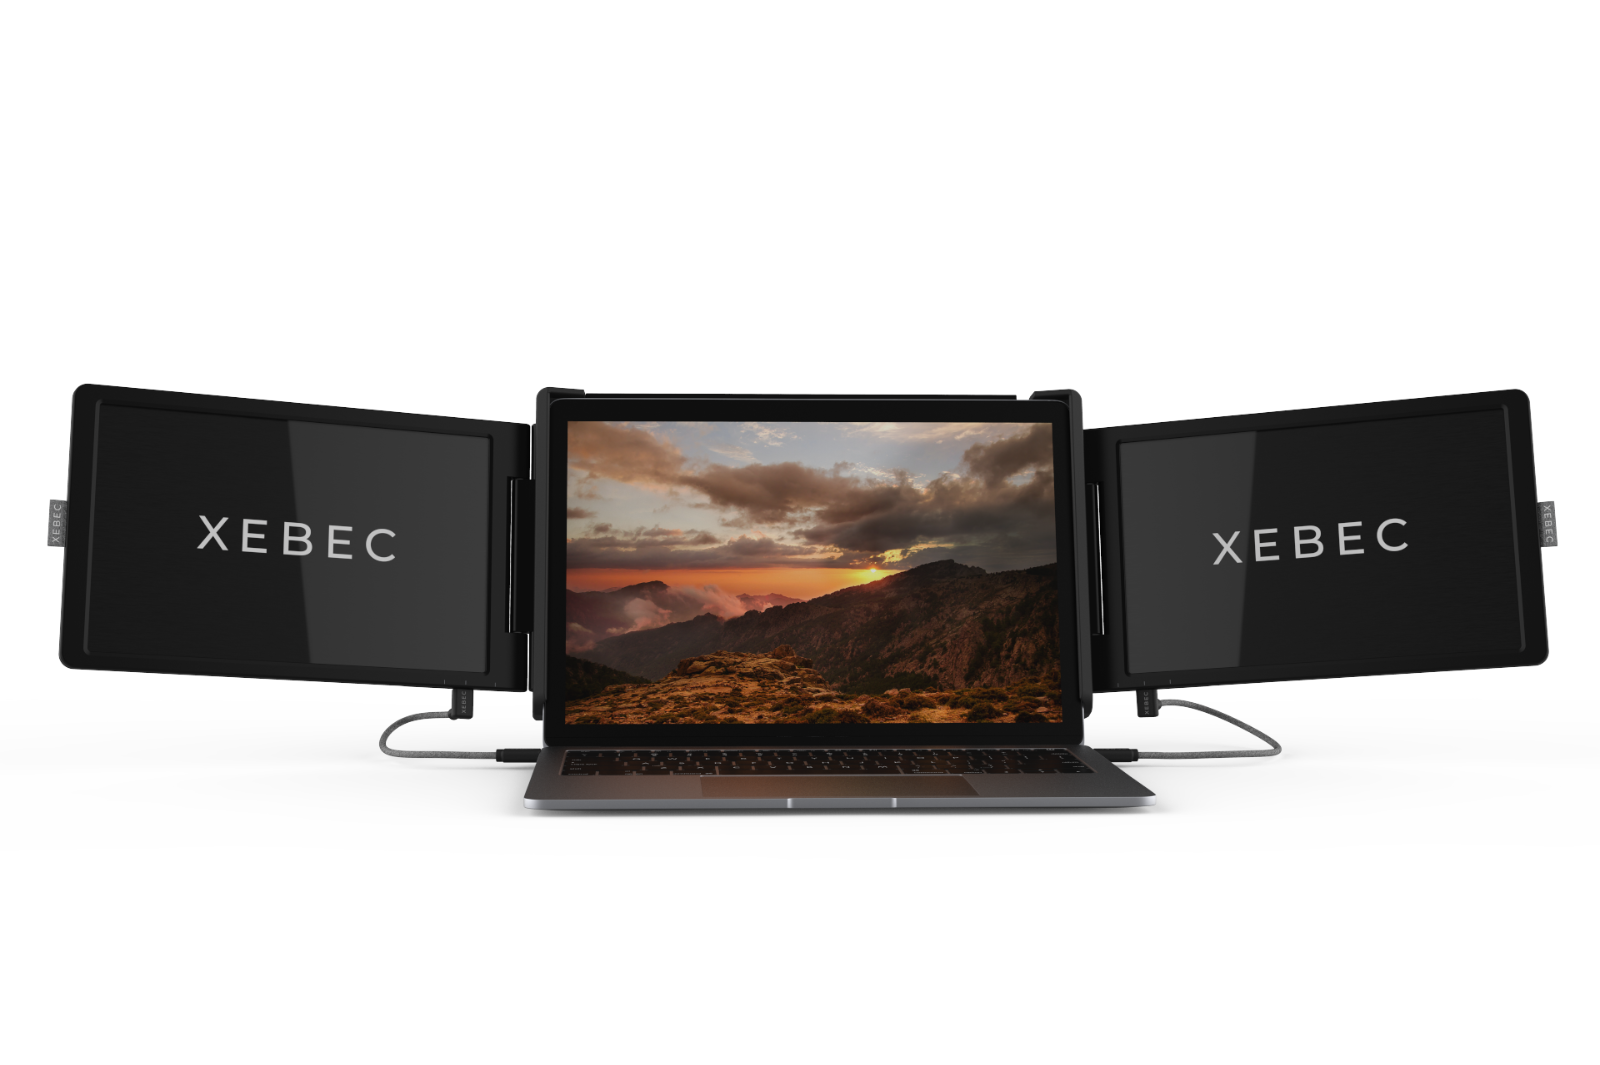 Xebec Tri-Screen 2 - Dual 10.1 Inch 1920 x 1200 Full-HD LCD IPS Panel Monitors - Refurbished $299.99